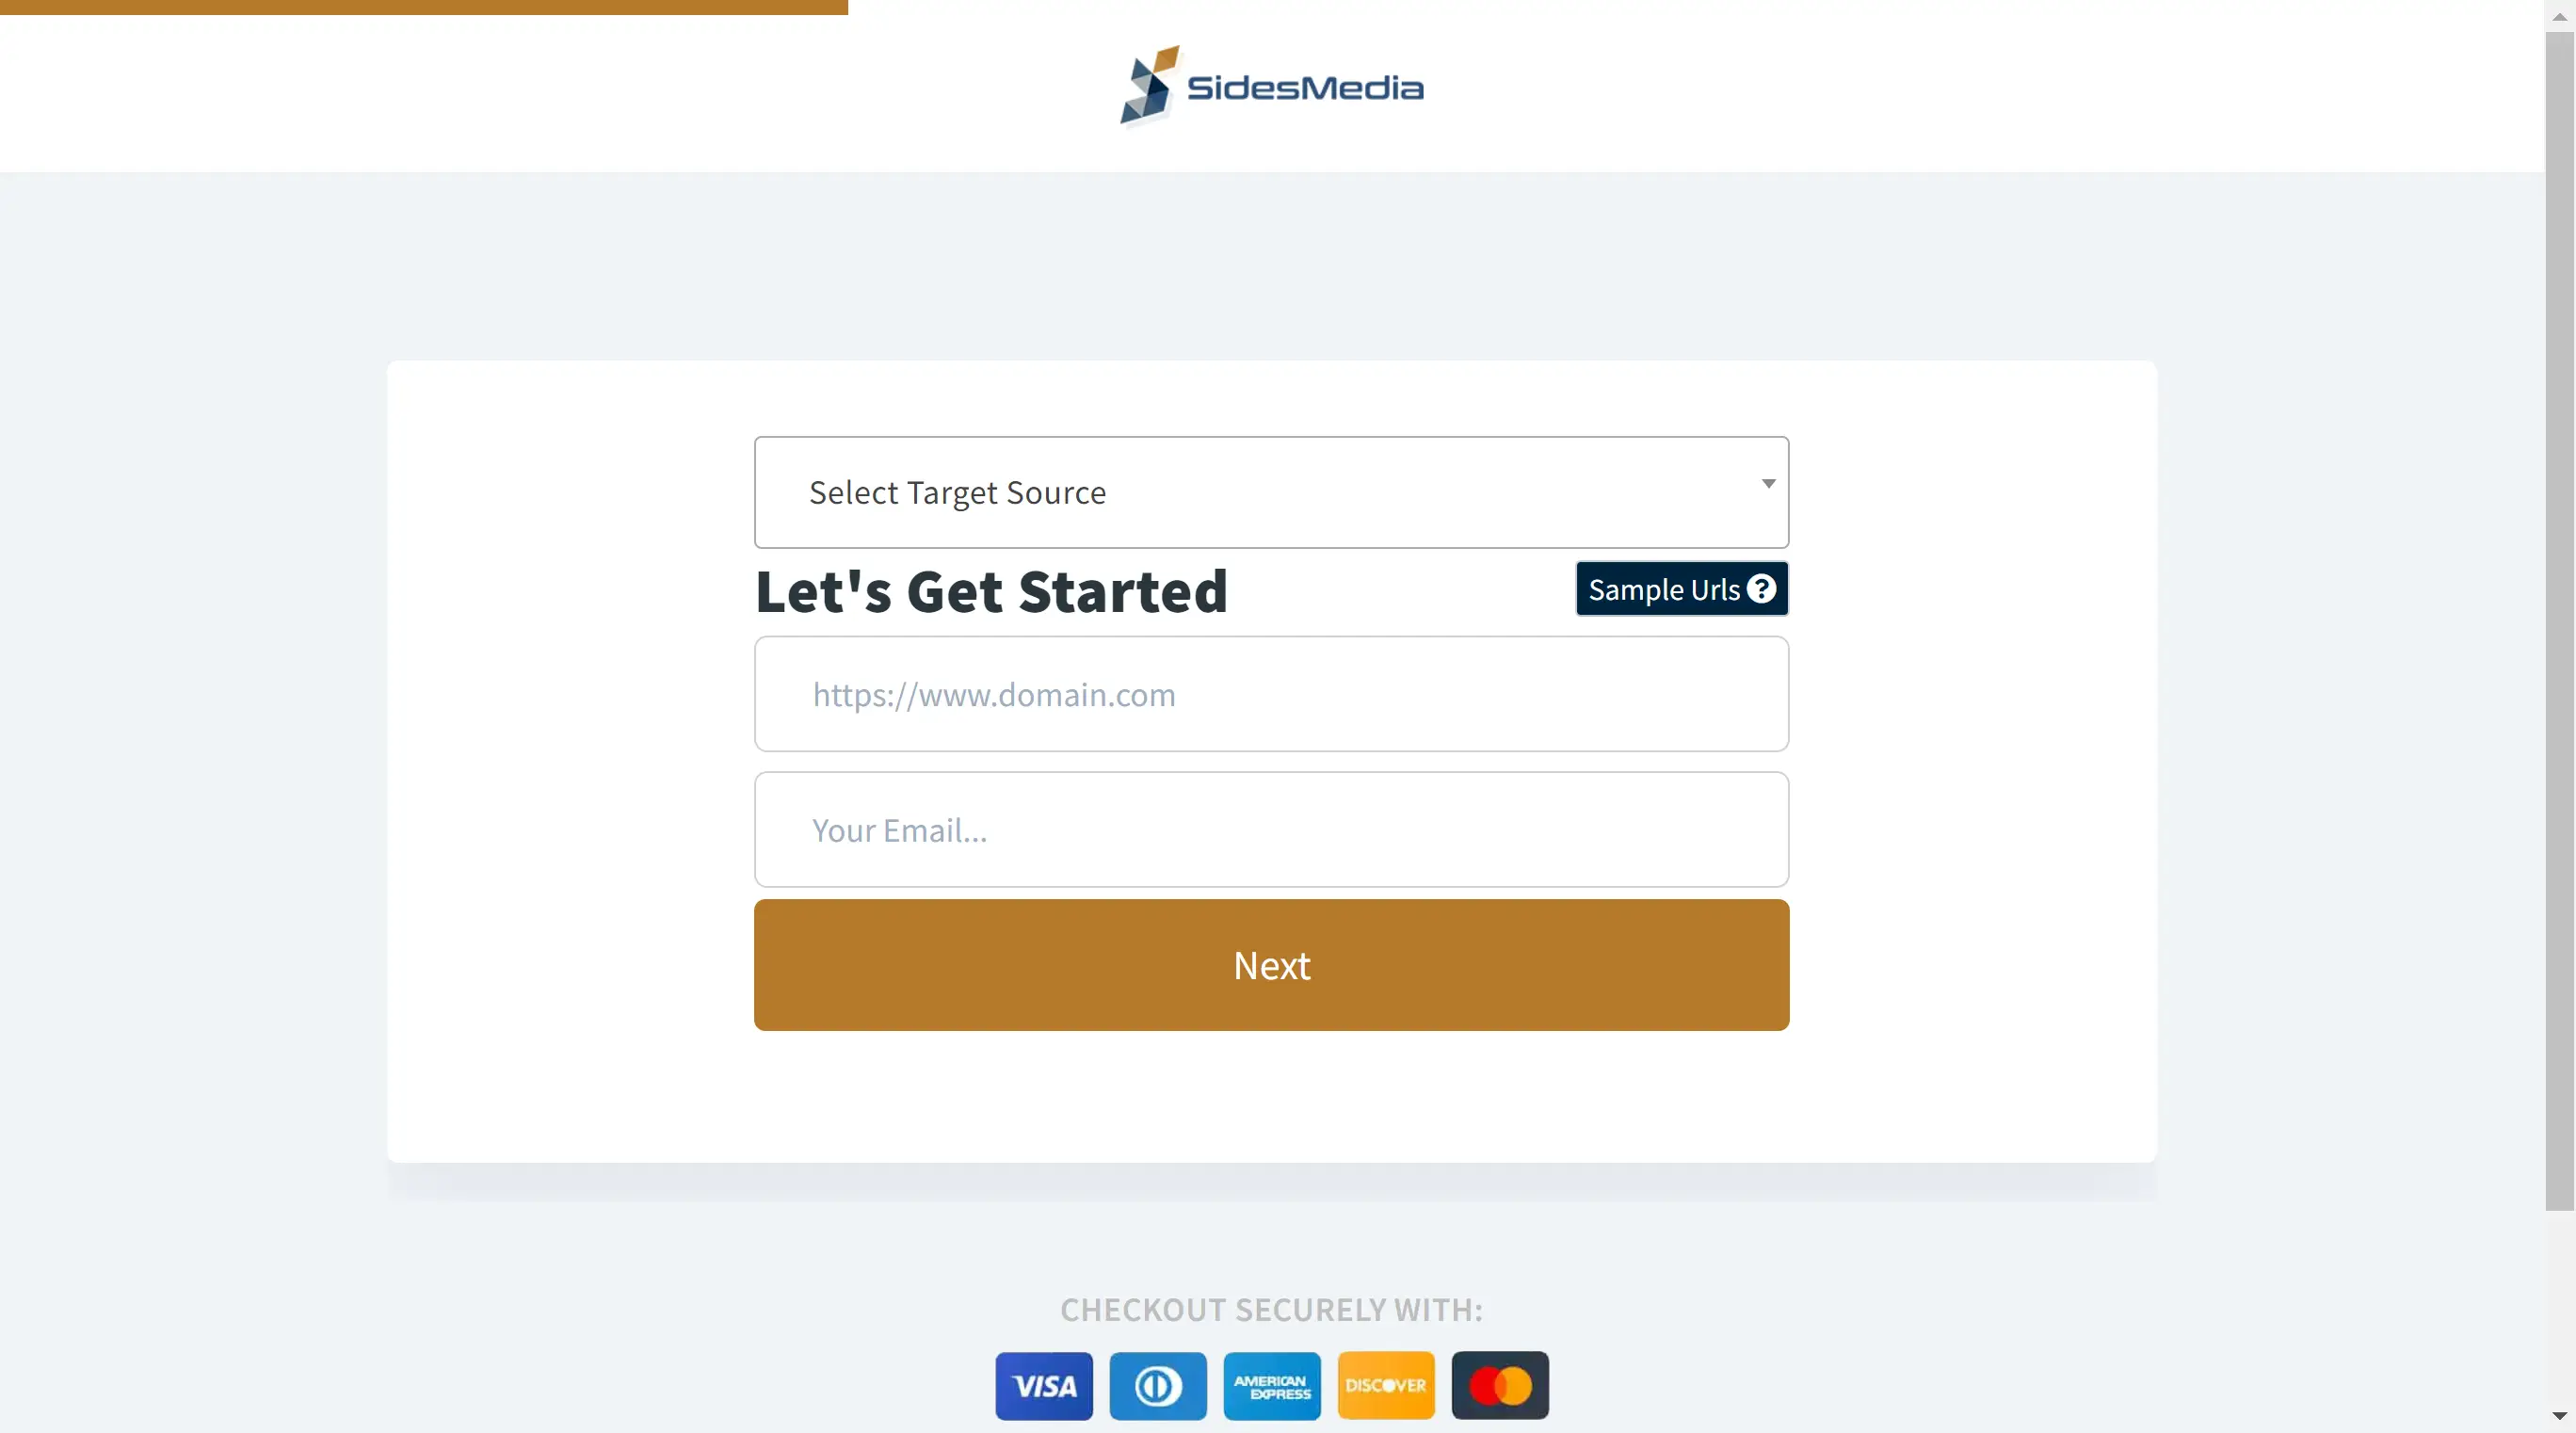 Sidesmedia purchase page screenshot.